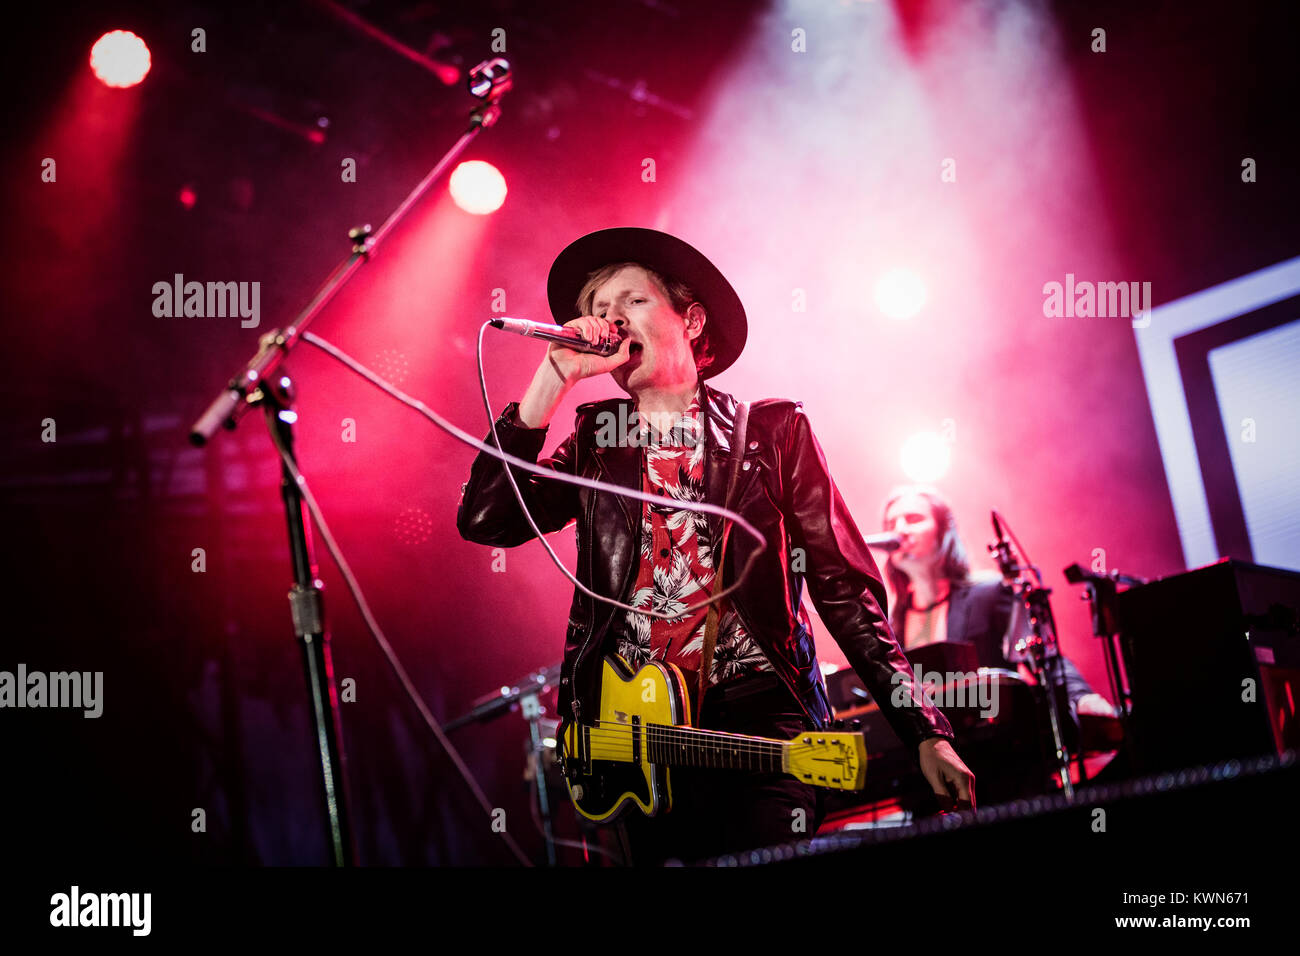 The American singer, songwriter and multi-instrumentalist Beck performs a live concert at the Danish music festival SmukFest / Skanderborg Festival 2015. Denmark, 08/08 2015. Stock Photo